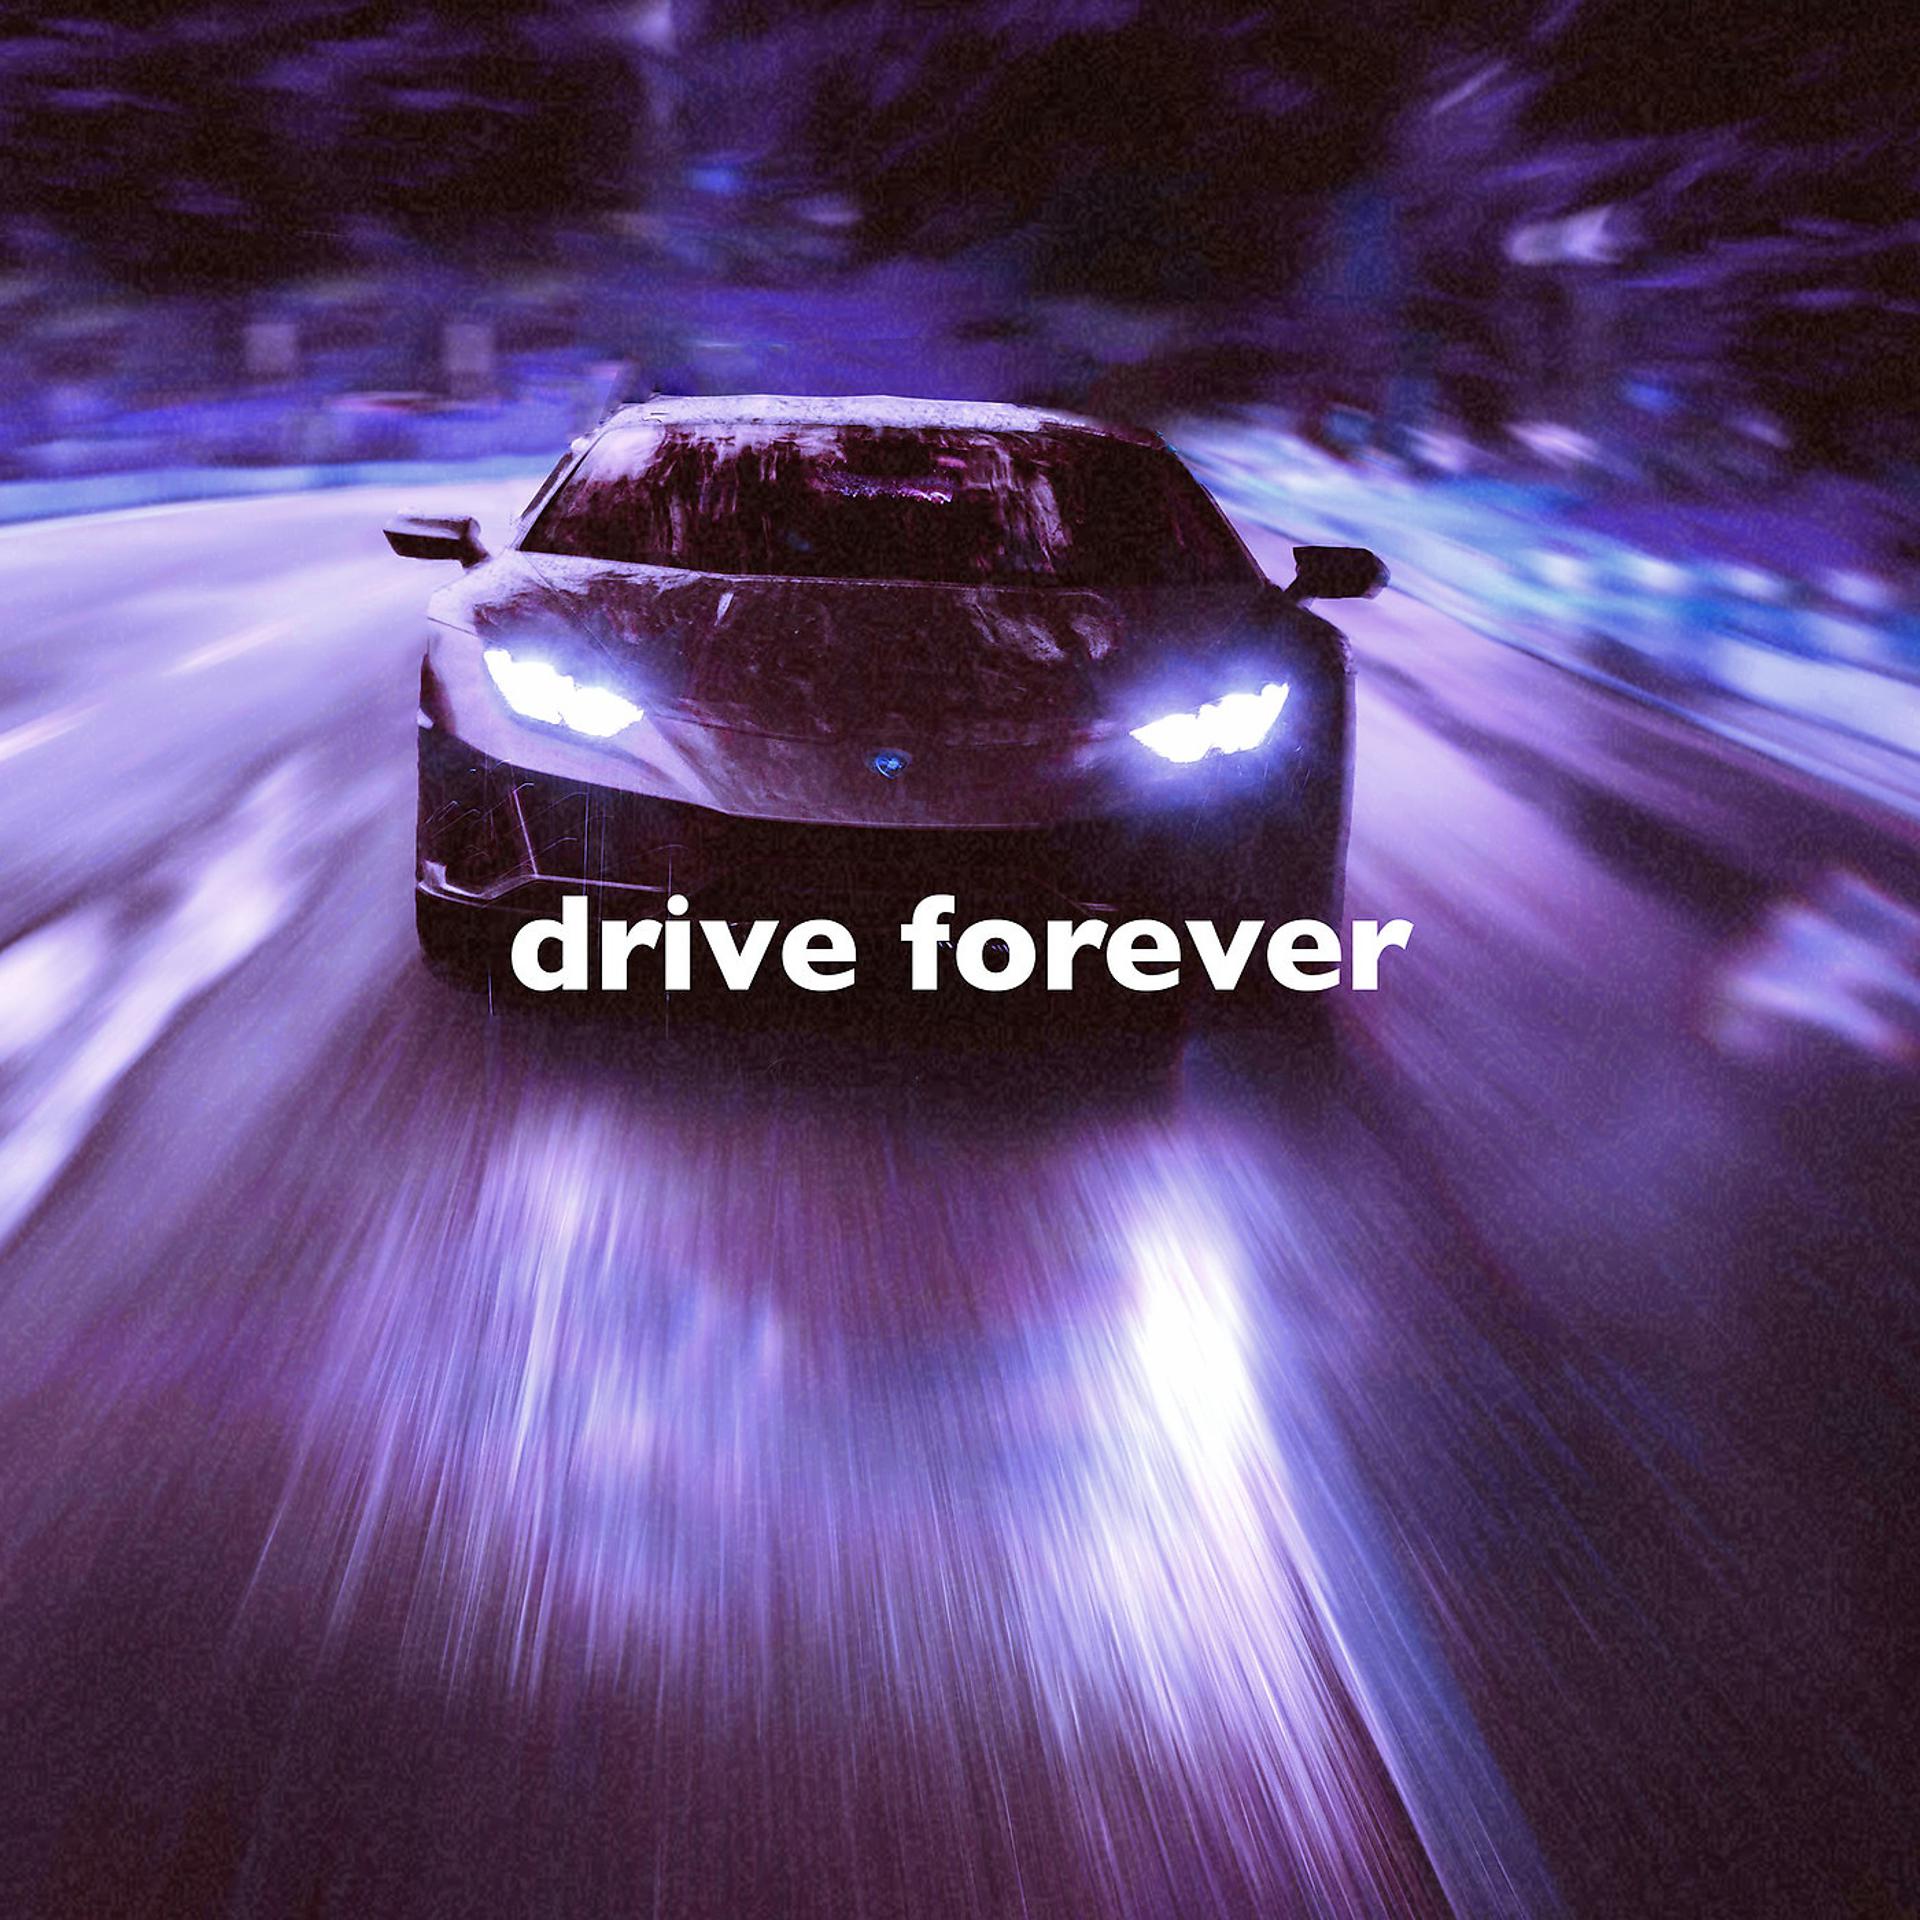 Drive forever babbeo. Drive Forever. Drive Forever Forever. Night Drive Slowed Reverb. Drive Forever Remix.